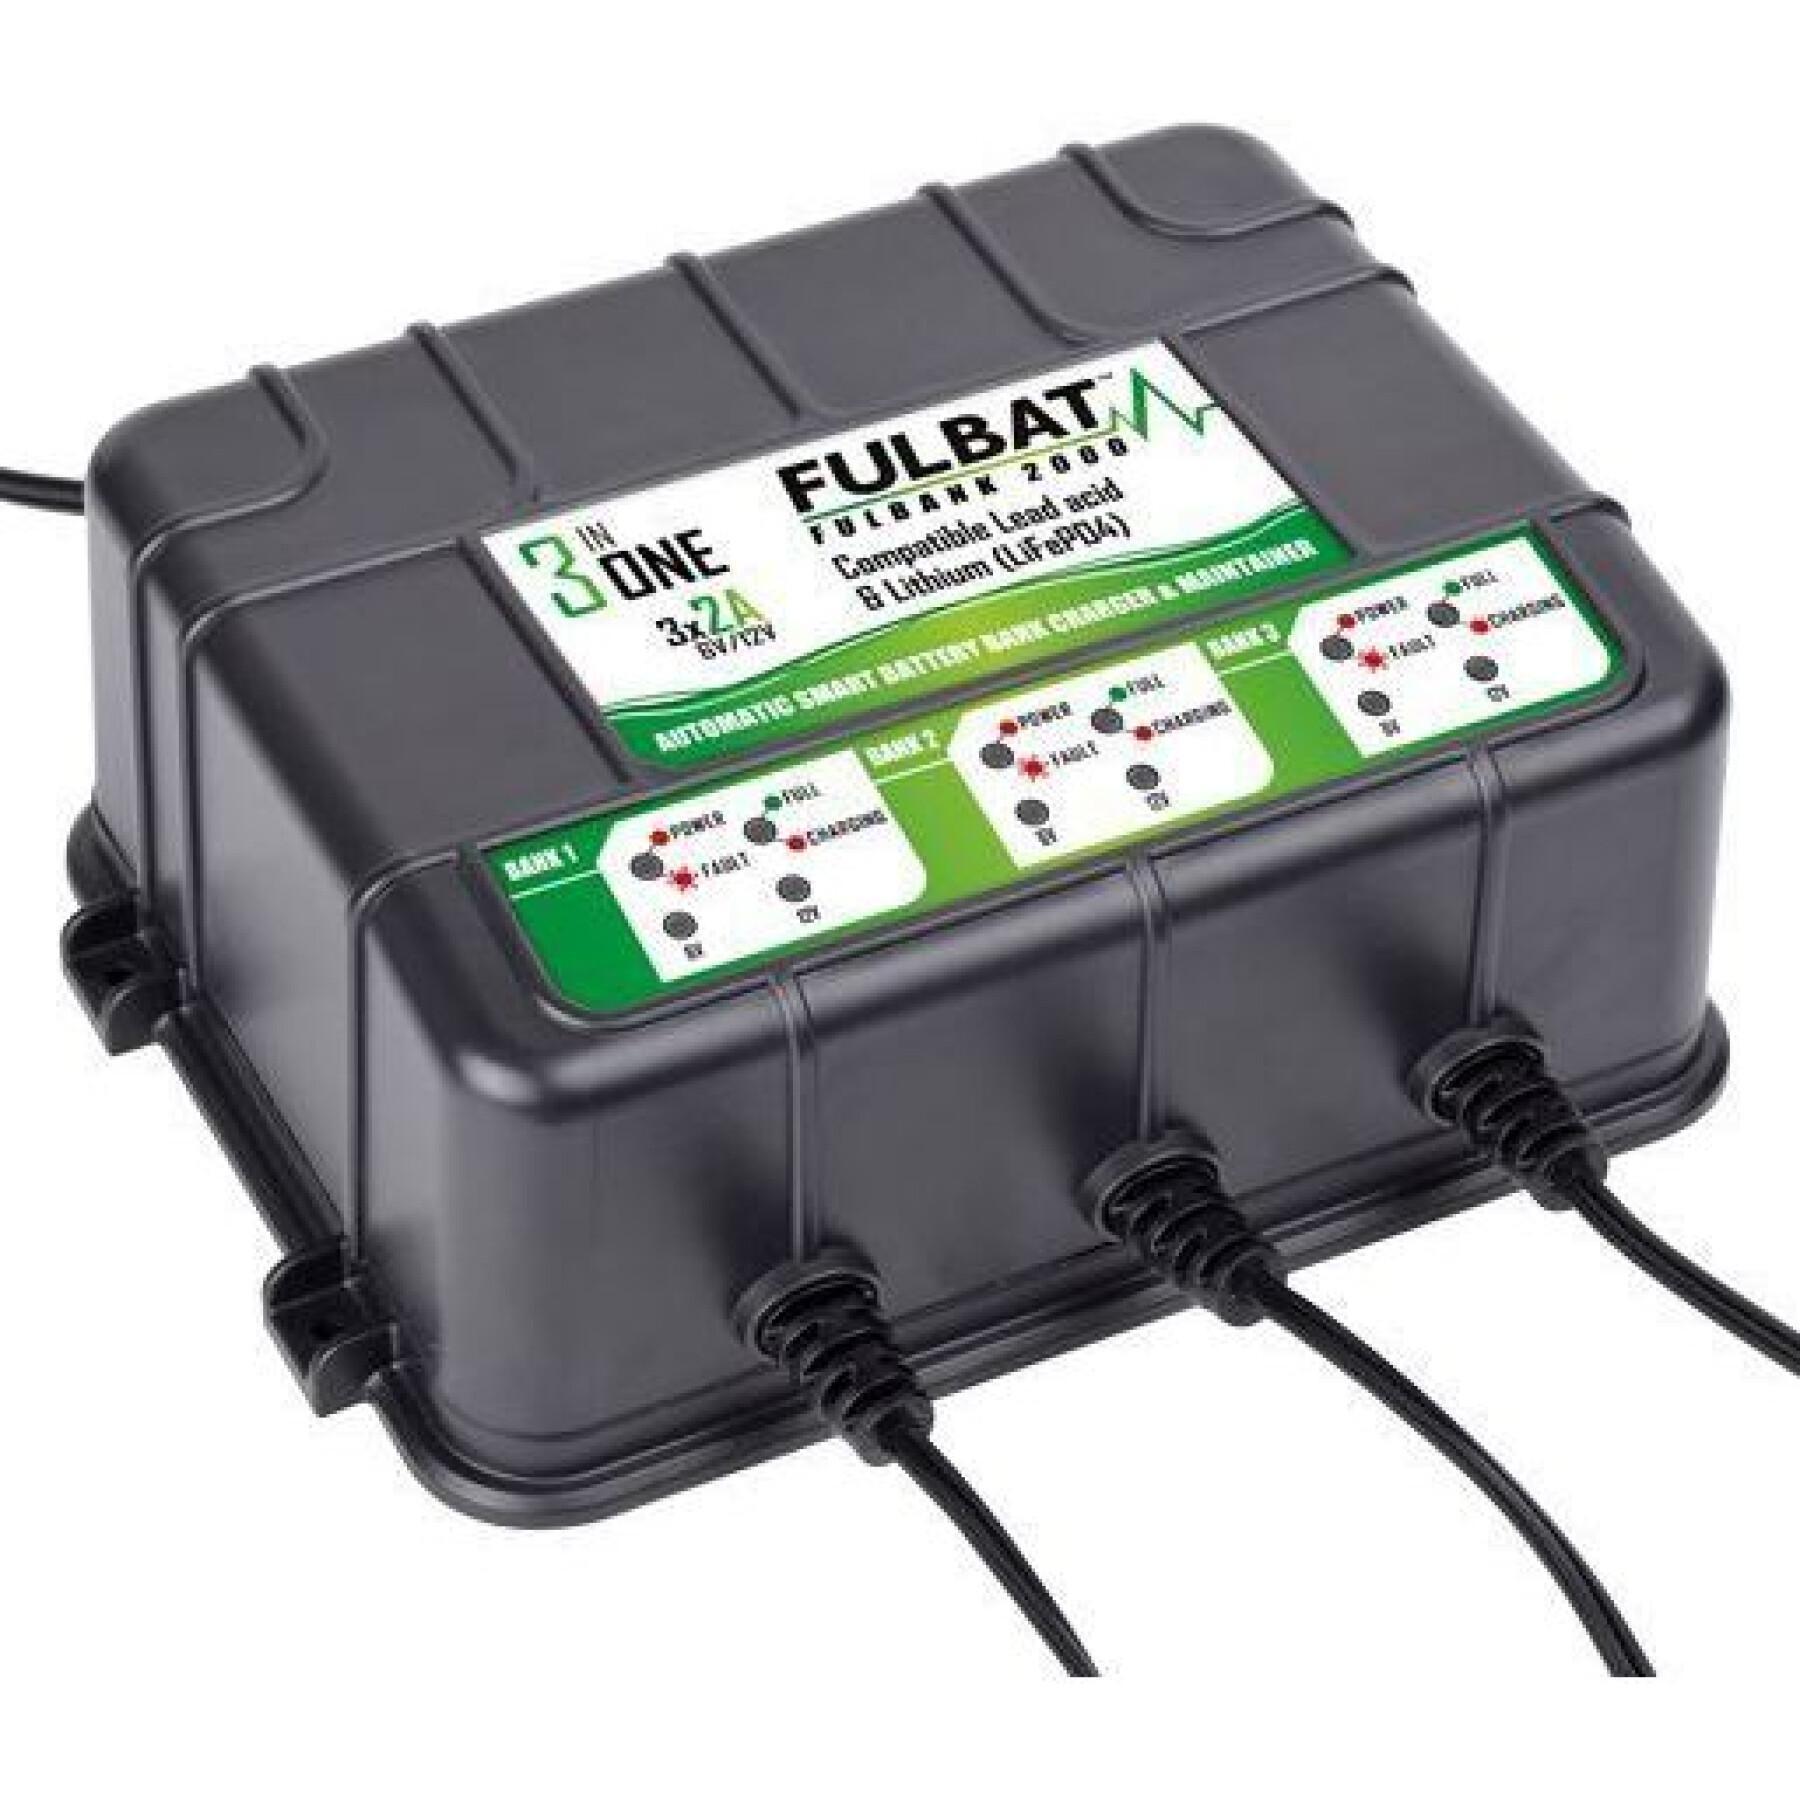 Battery charger Fulbat Fulbank 2000